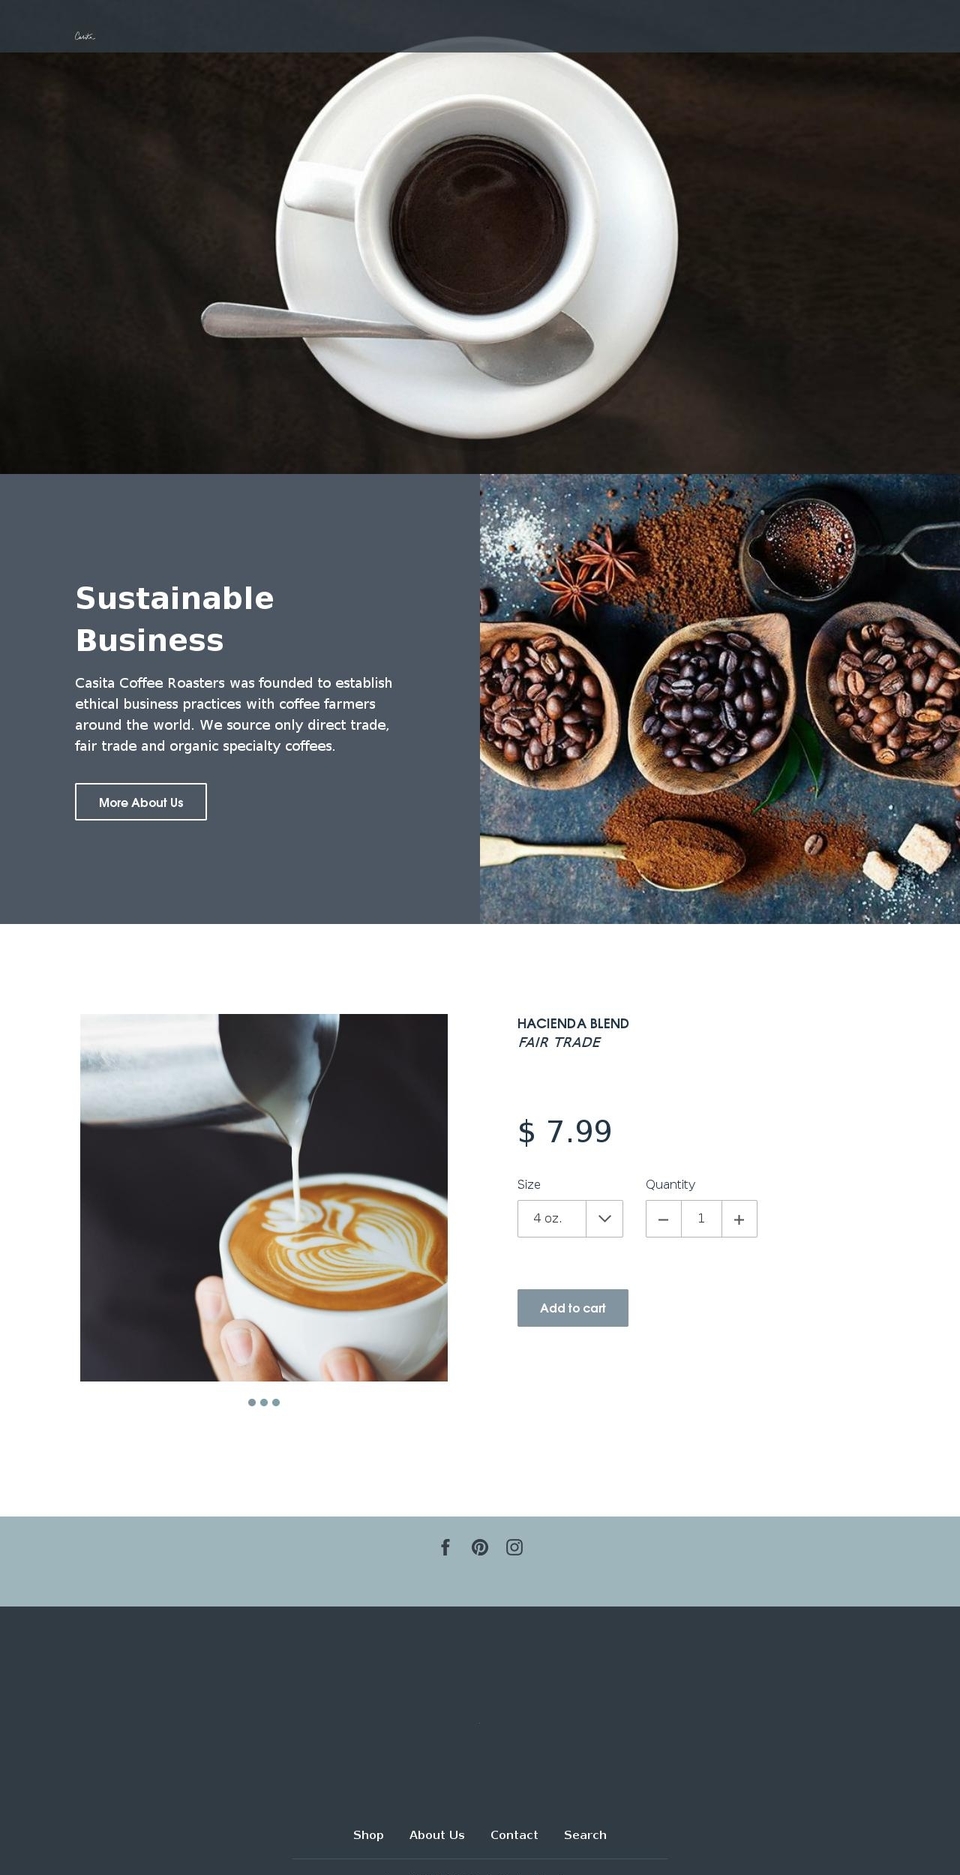 Casita Coffee Roasters 2 Shopify theme site example casita.coffee